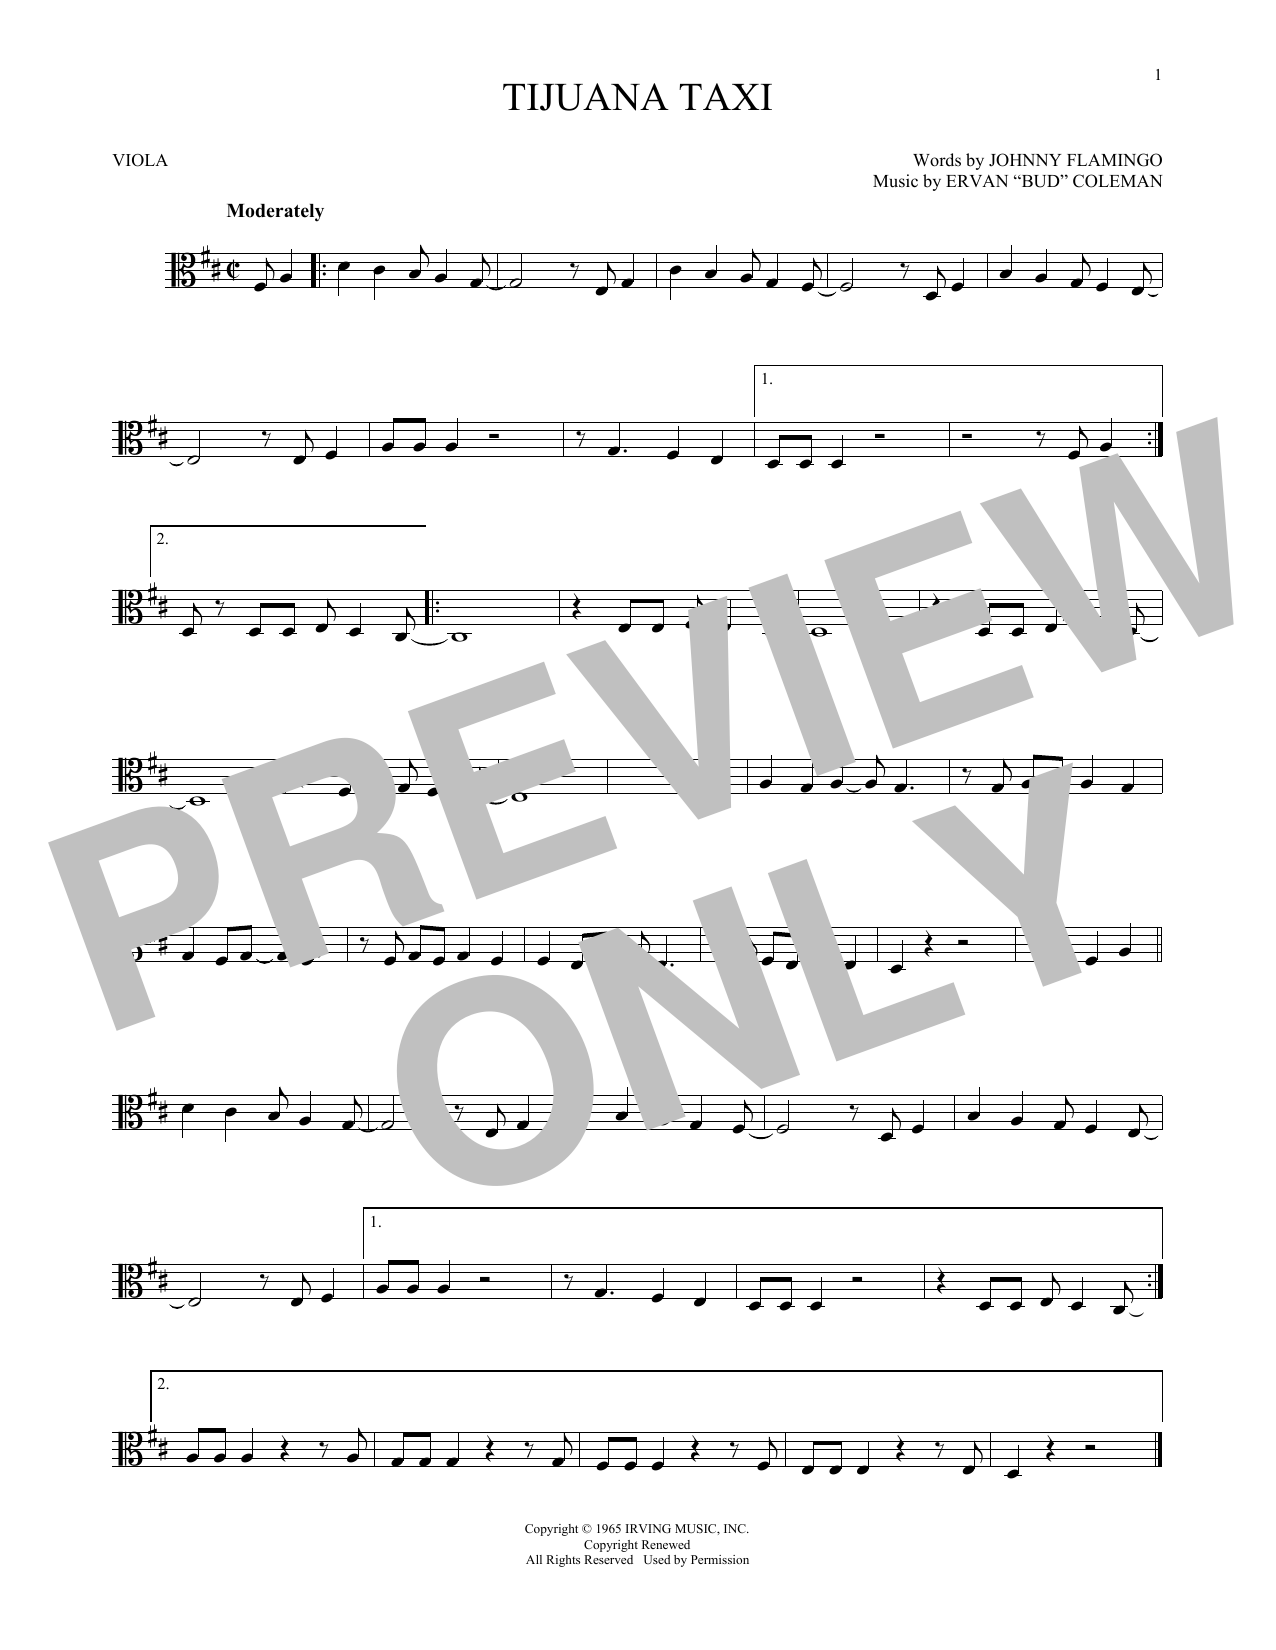 Download Herb Alpert & The Tijuana Brass Band Tijuana Taxi Sheet Music